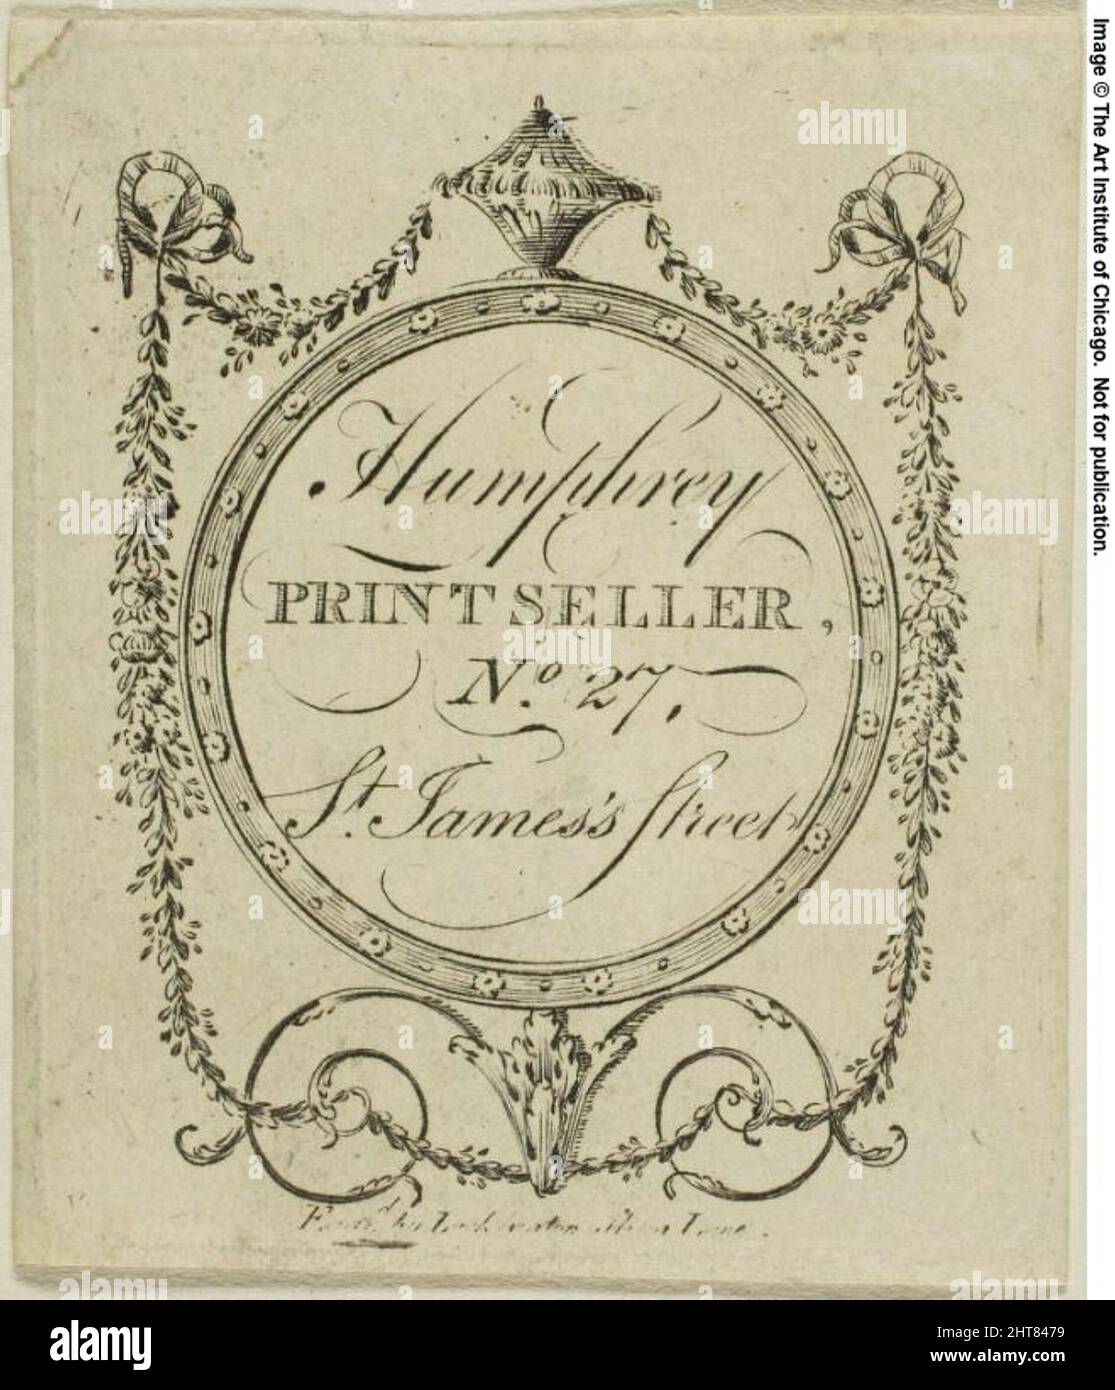 Humphrey, Printseller, No. 27 St. James's Street, n.d. Stock Photo